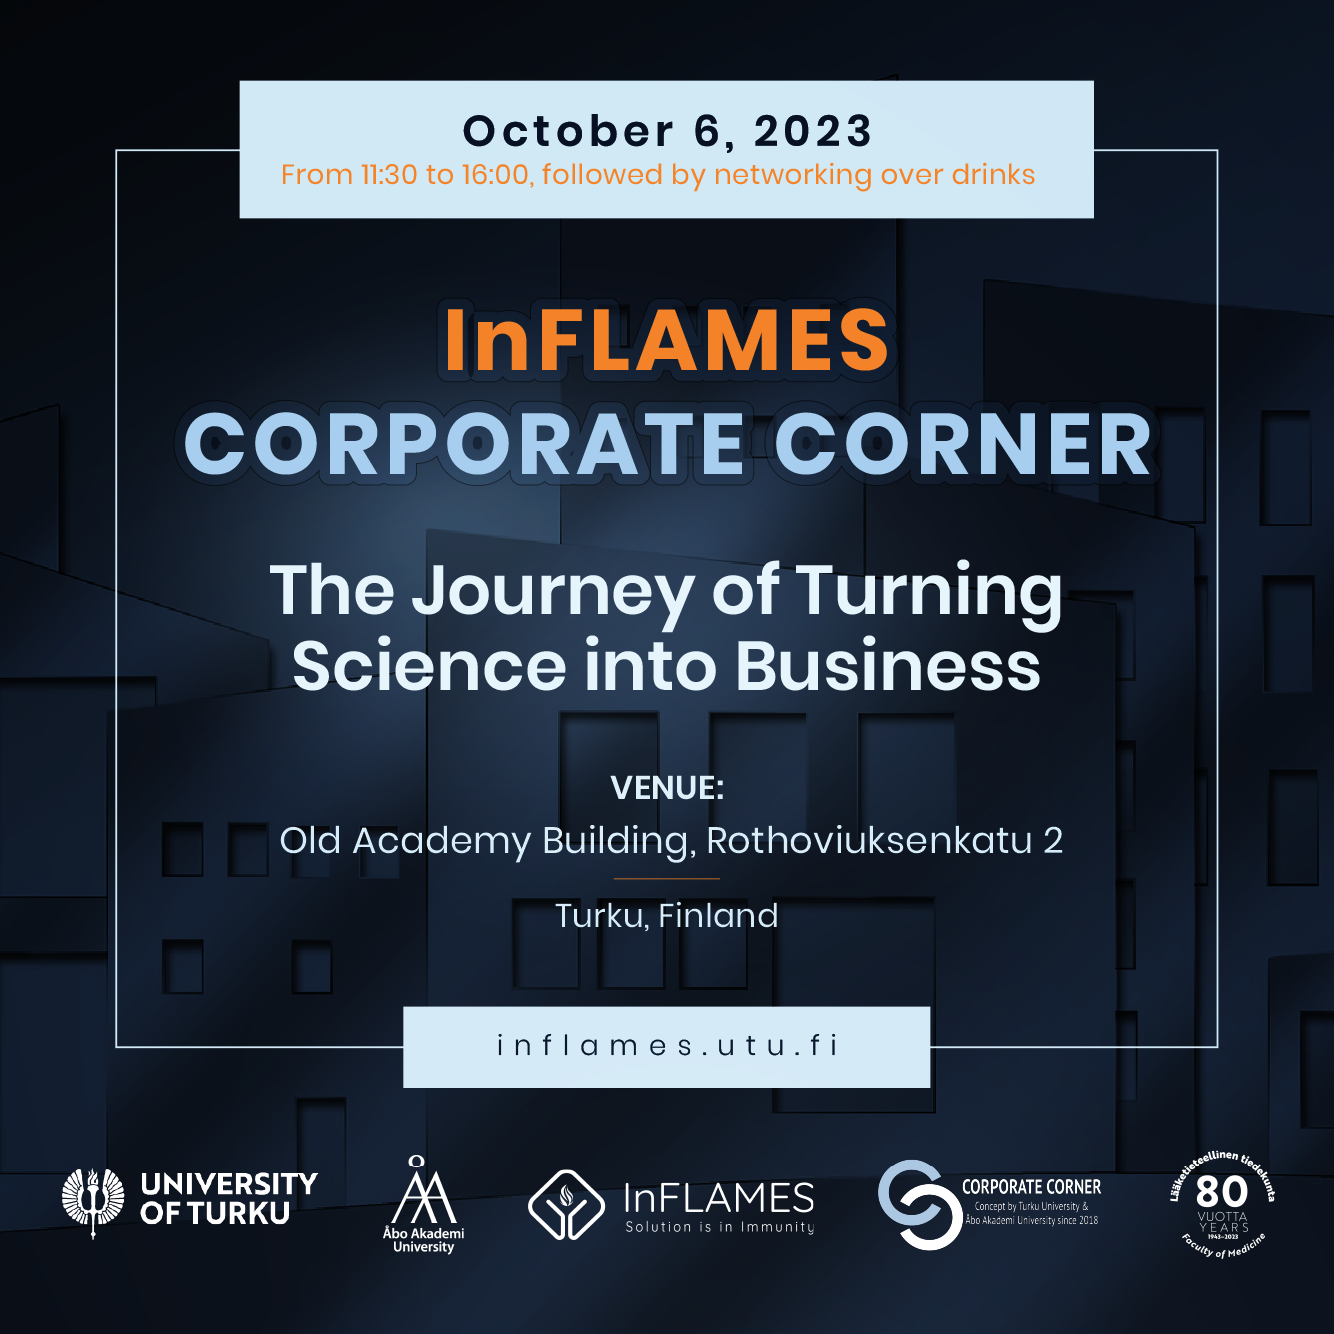 InFLAMES Corporate Corner